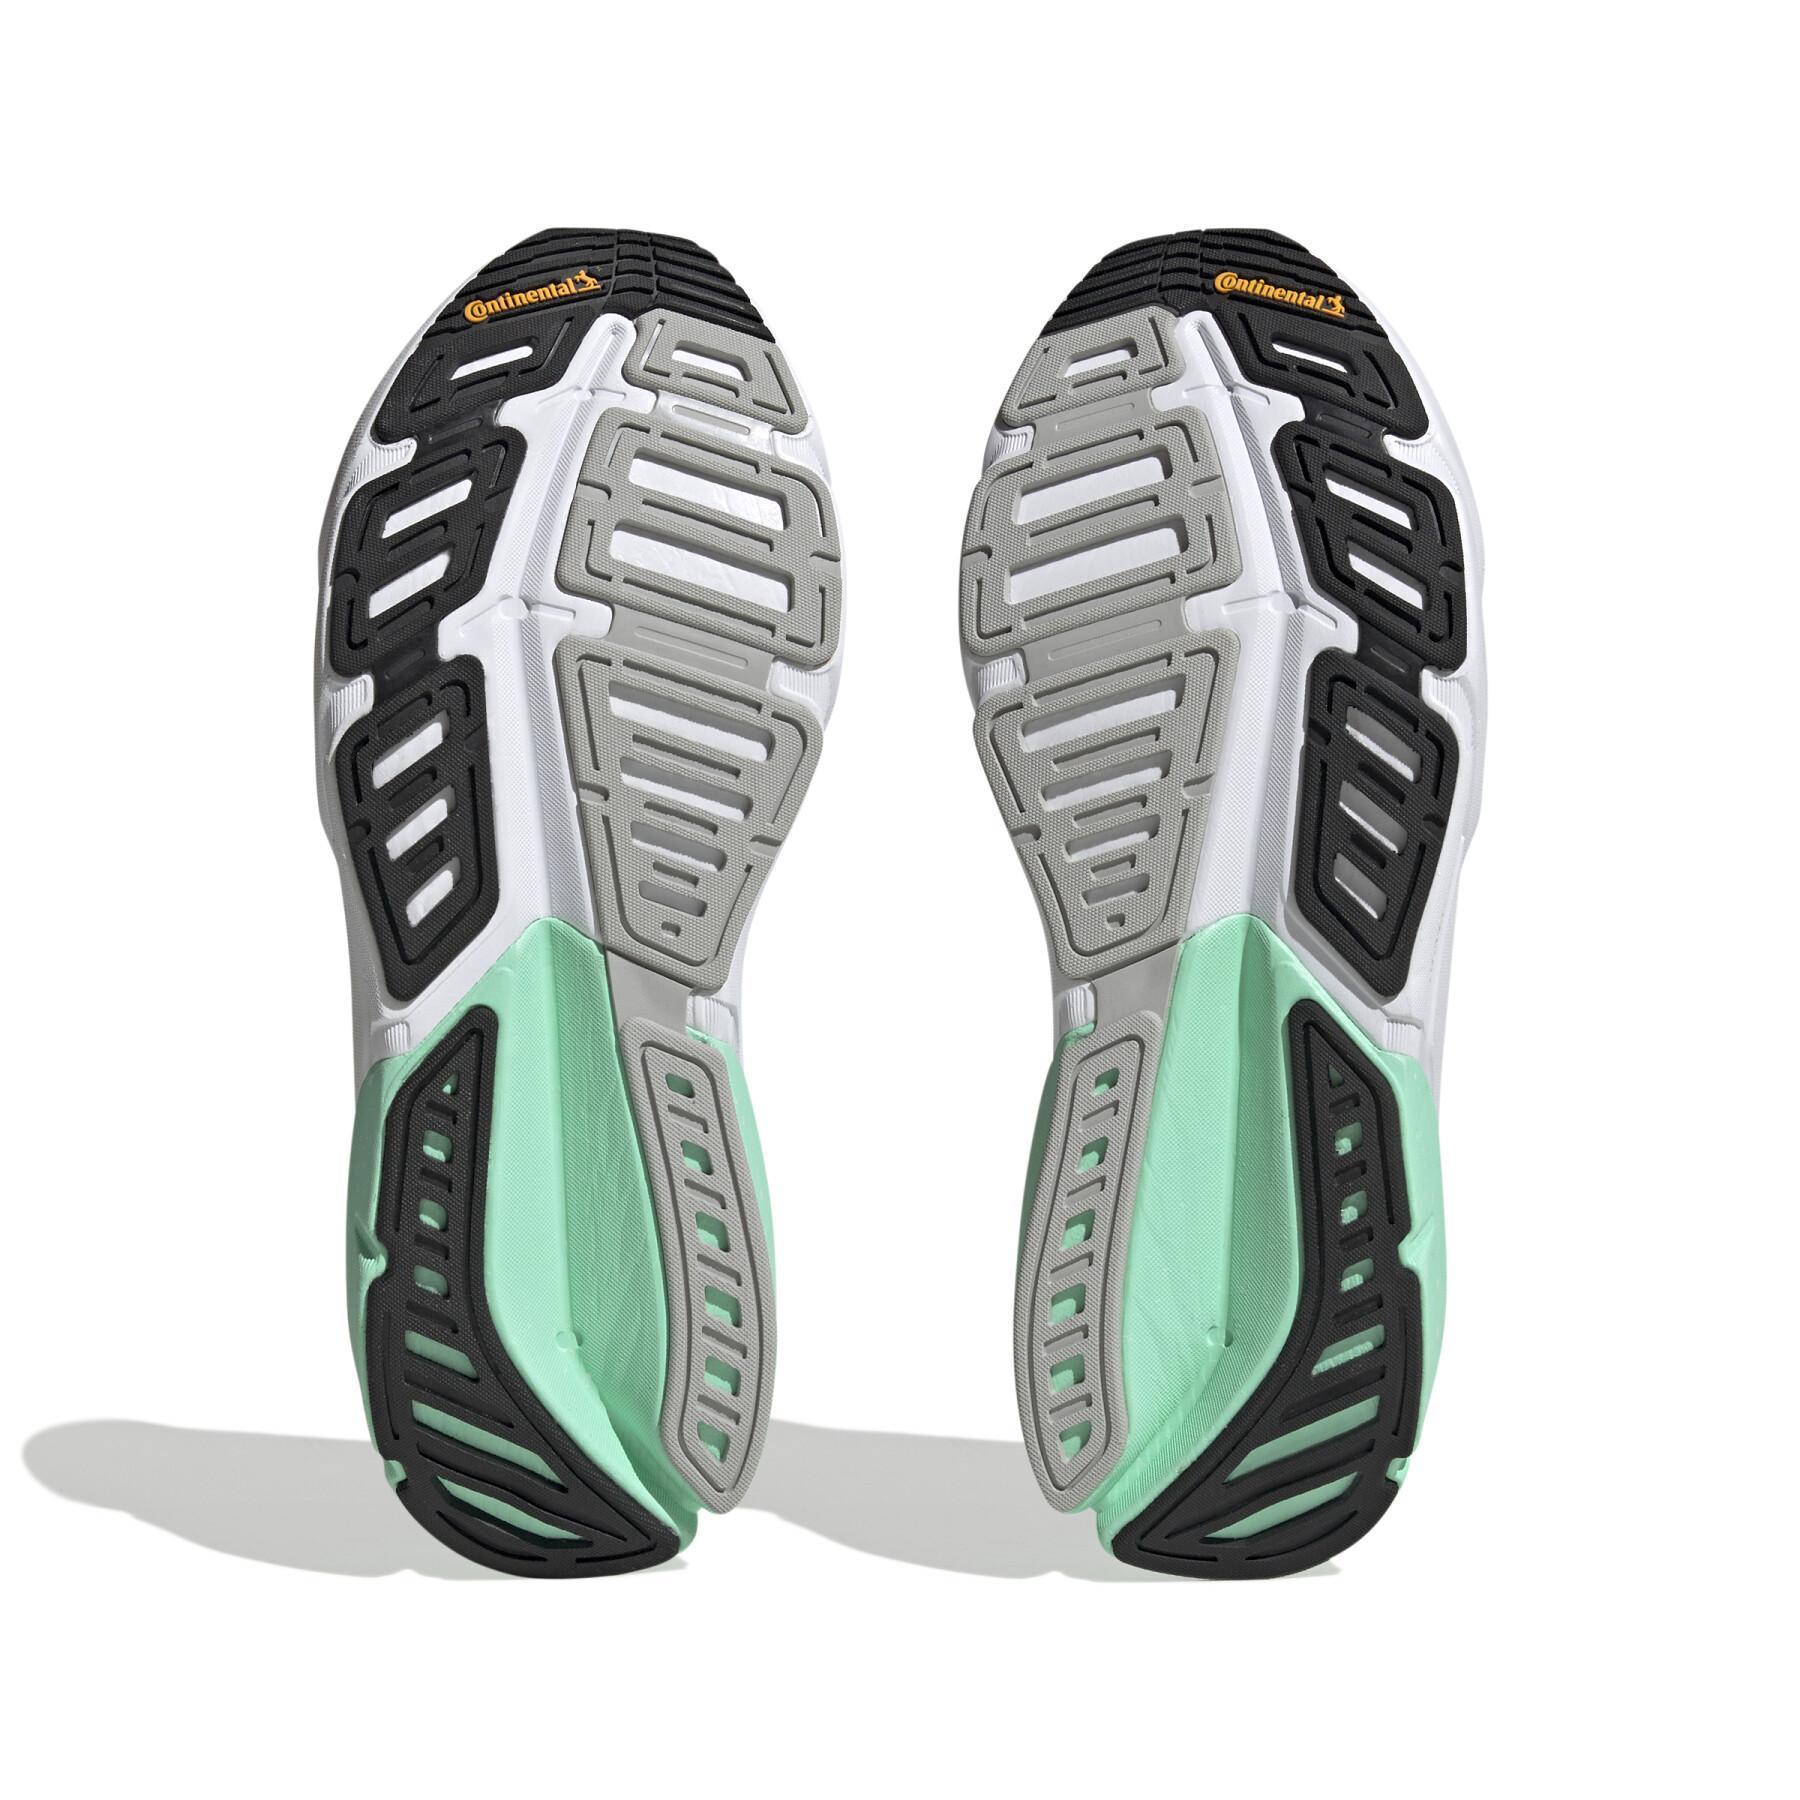 Running shoes adidas Adistar 2.0